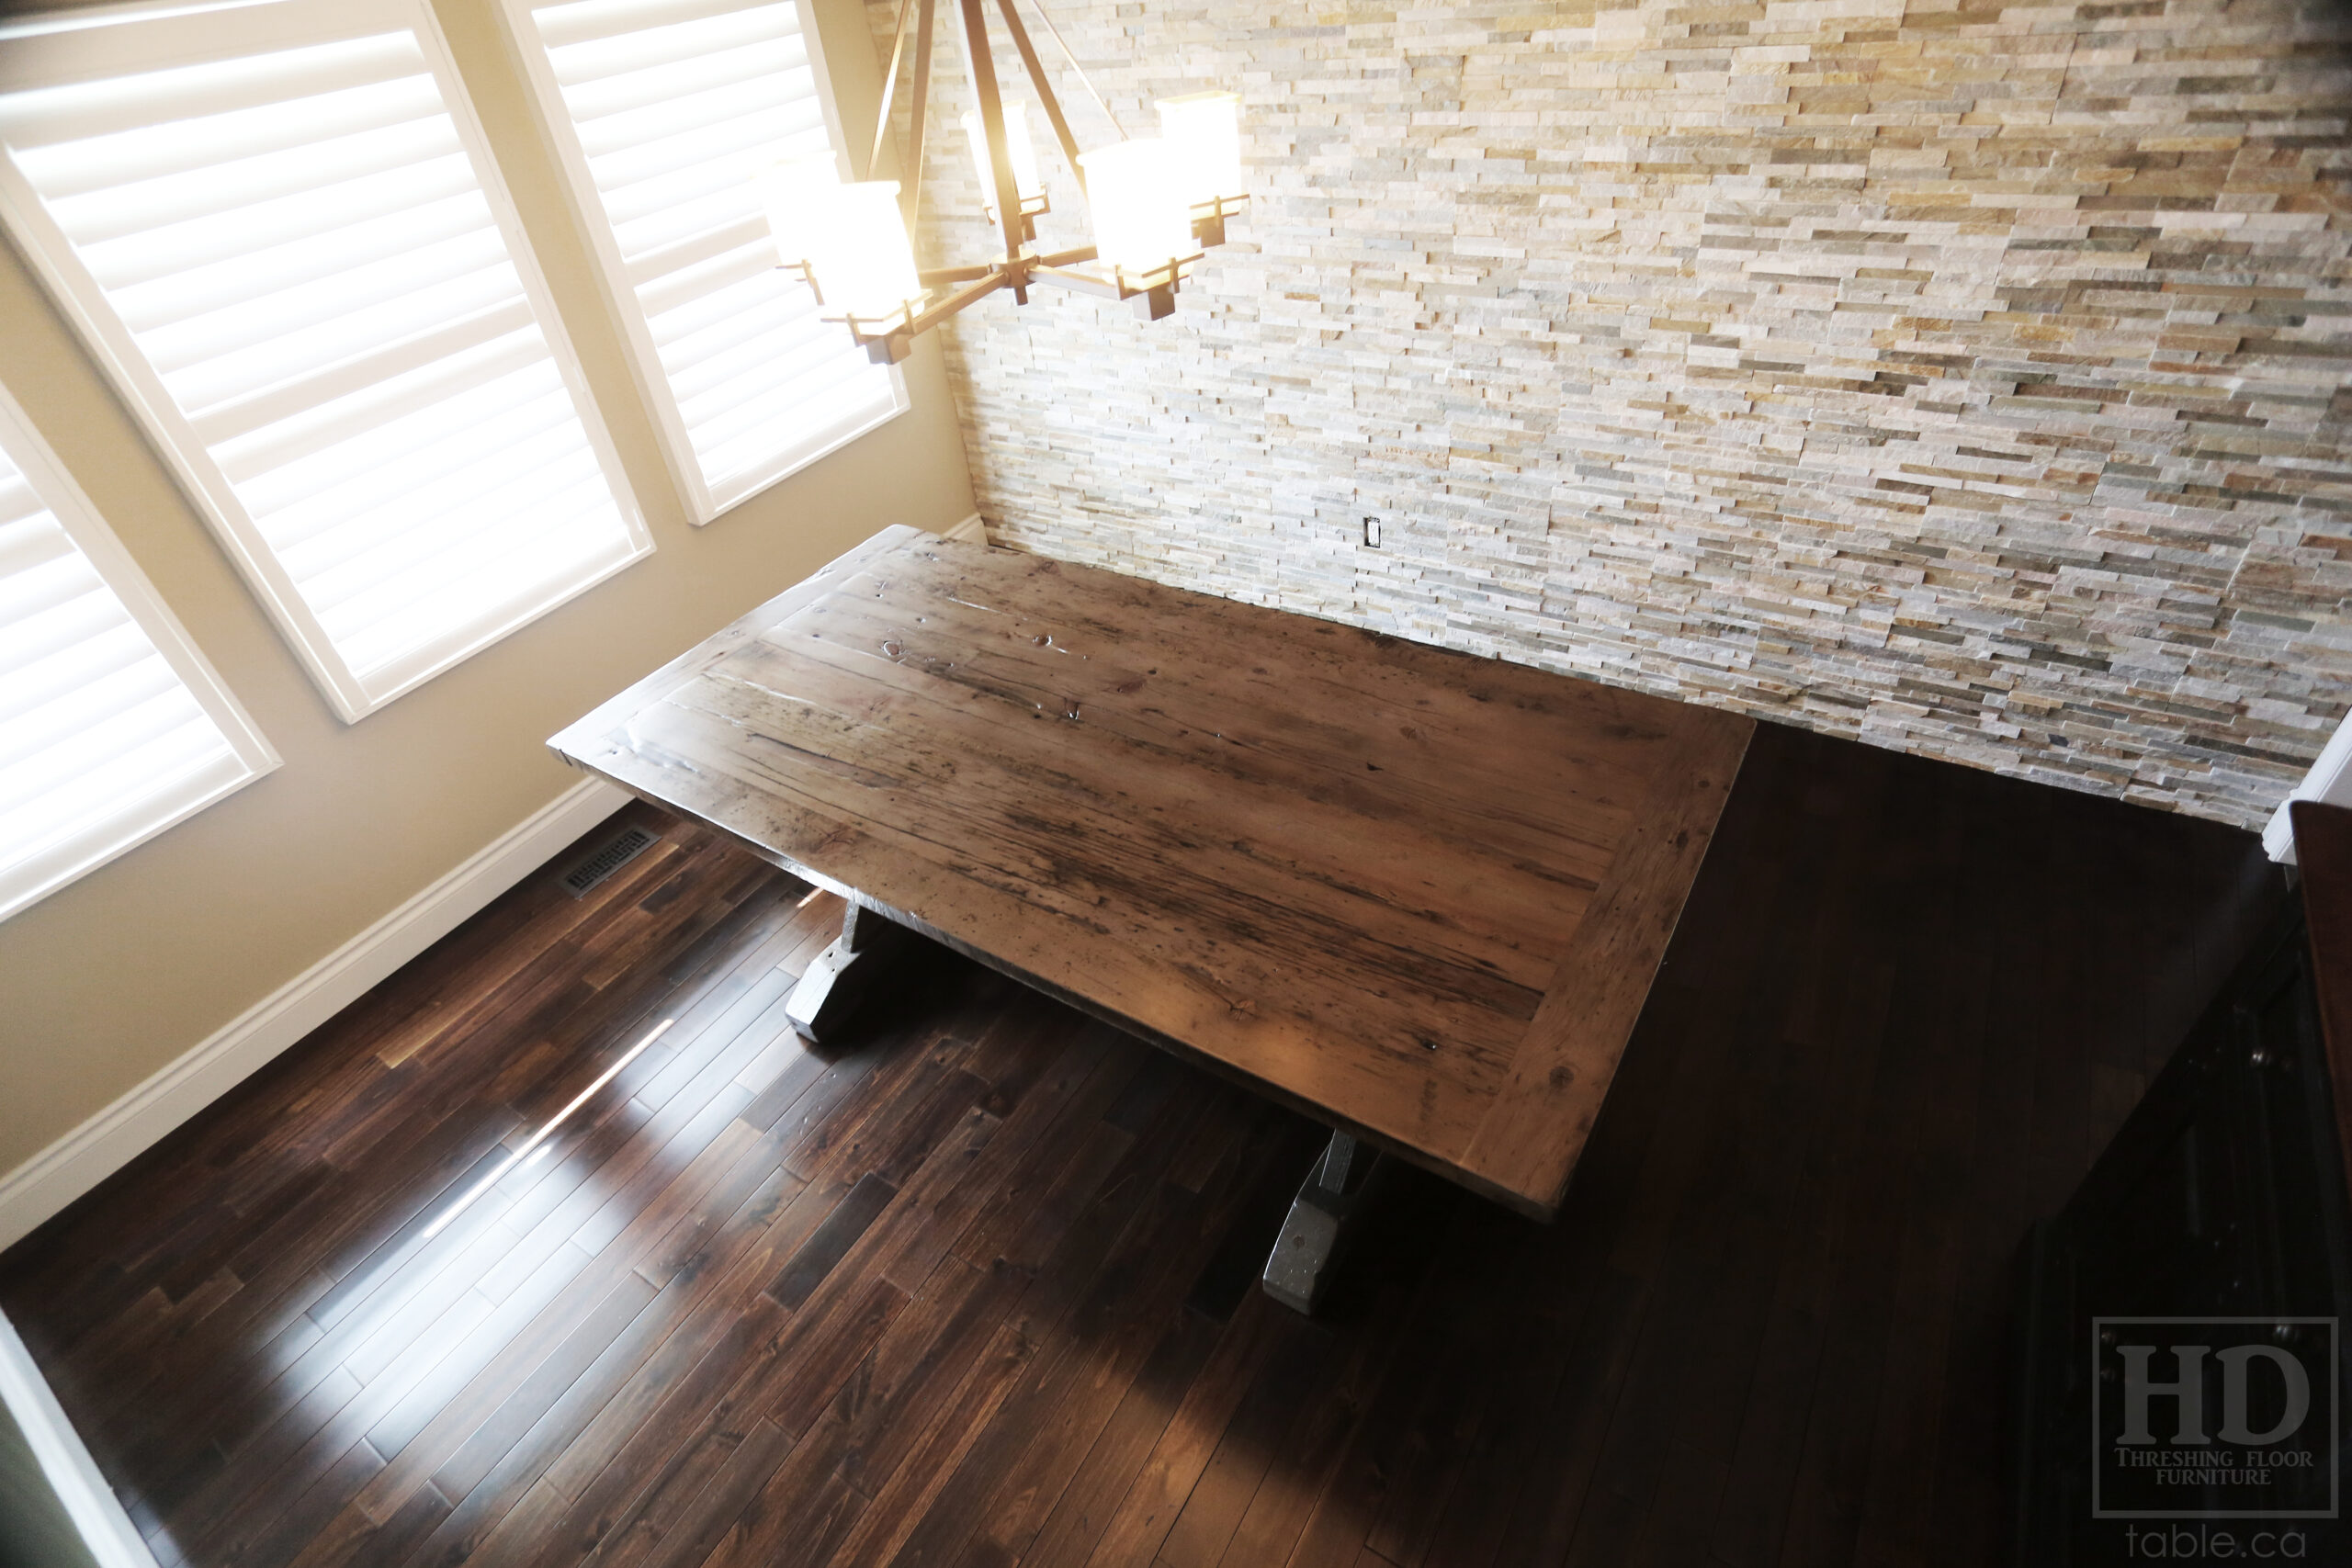 Rustic Reclaimed Wood Table by HD Threshing Floor Furniture / www.table.ca